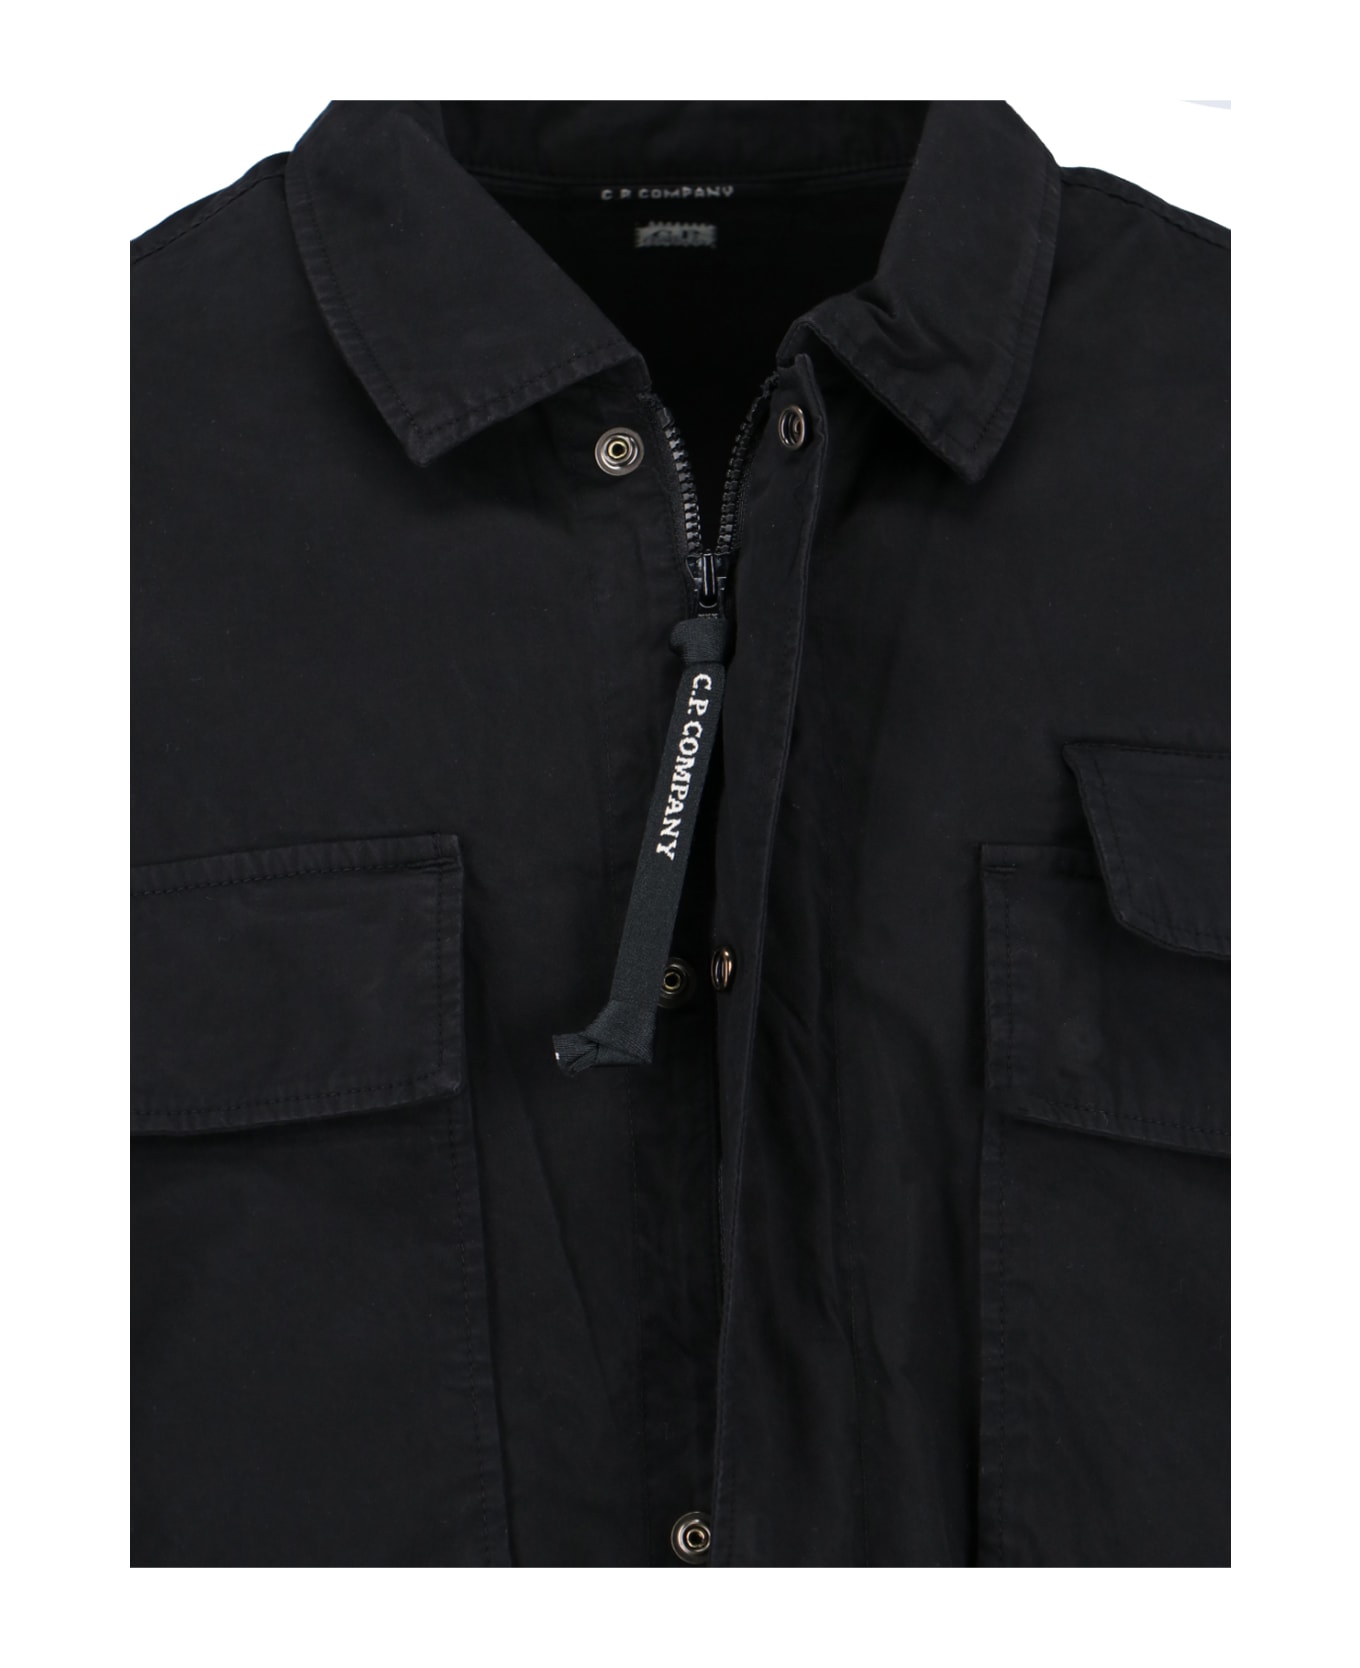 C.P. Company 'lens' Shirt Jacket - Black